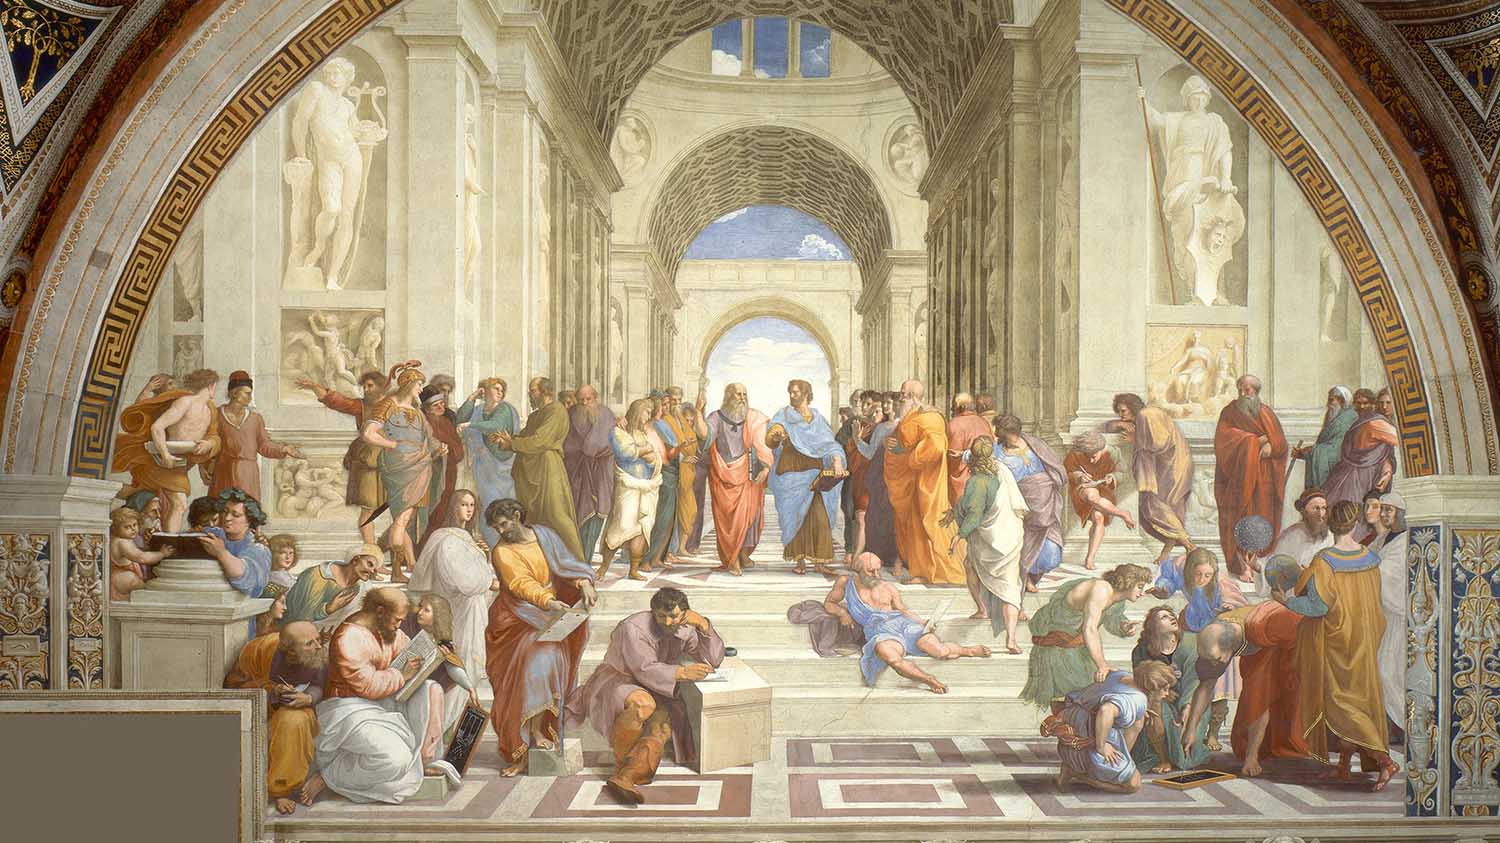 Semesterthema_WS20-21 (c) https://commons.wikimedia.org/wiki/File:Raphael_School_of_Athens.jpg